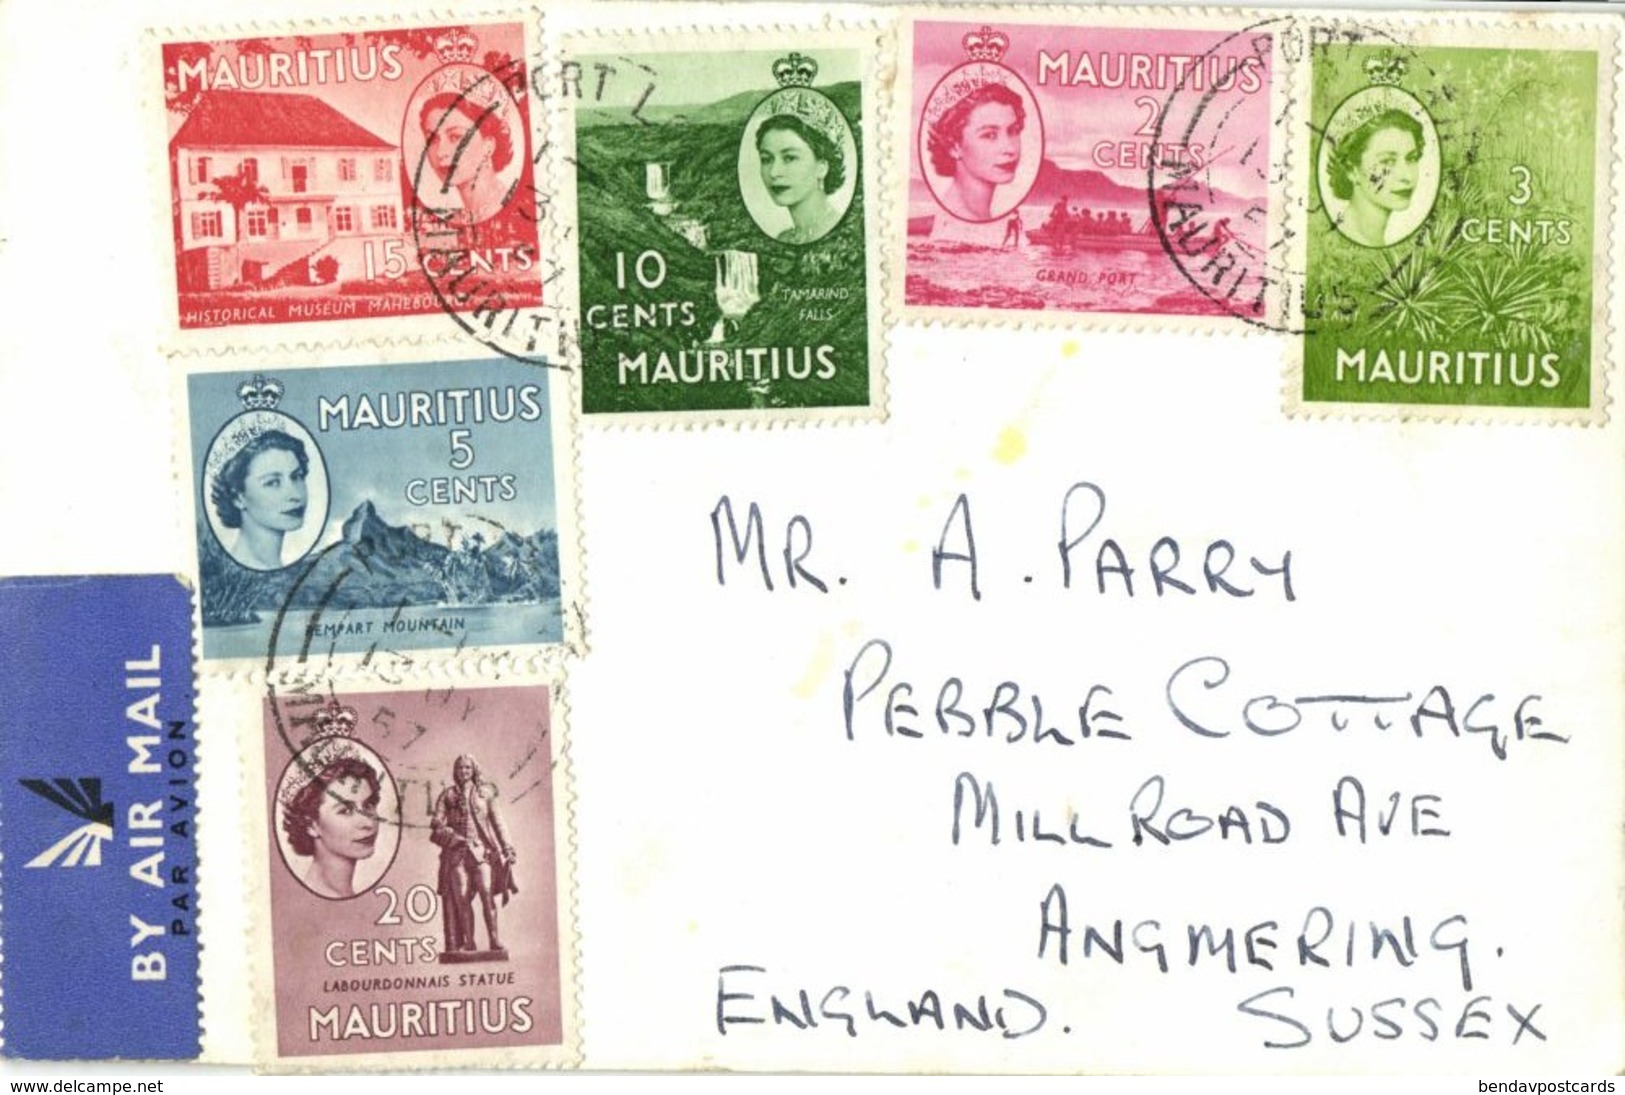 Mauritius, PORT-LOUIS, Harbour Scene (1957) RPPC Postcard - Maurice